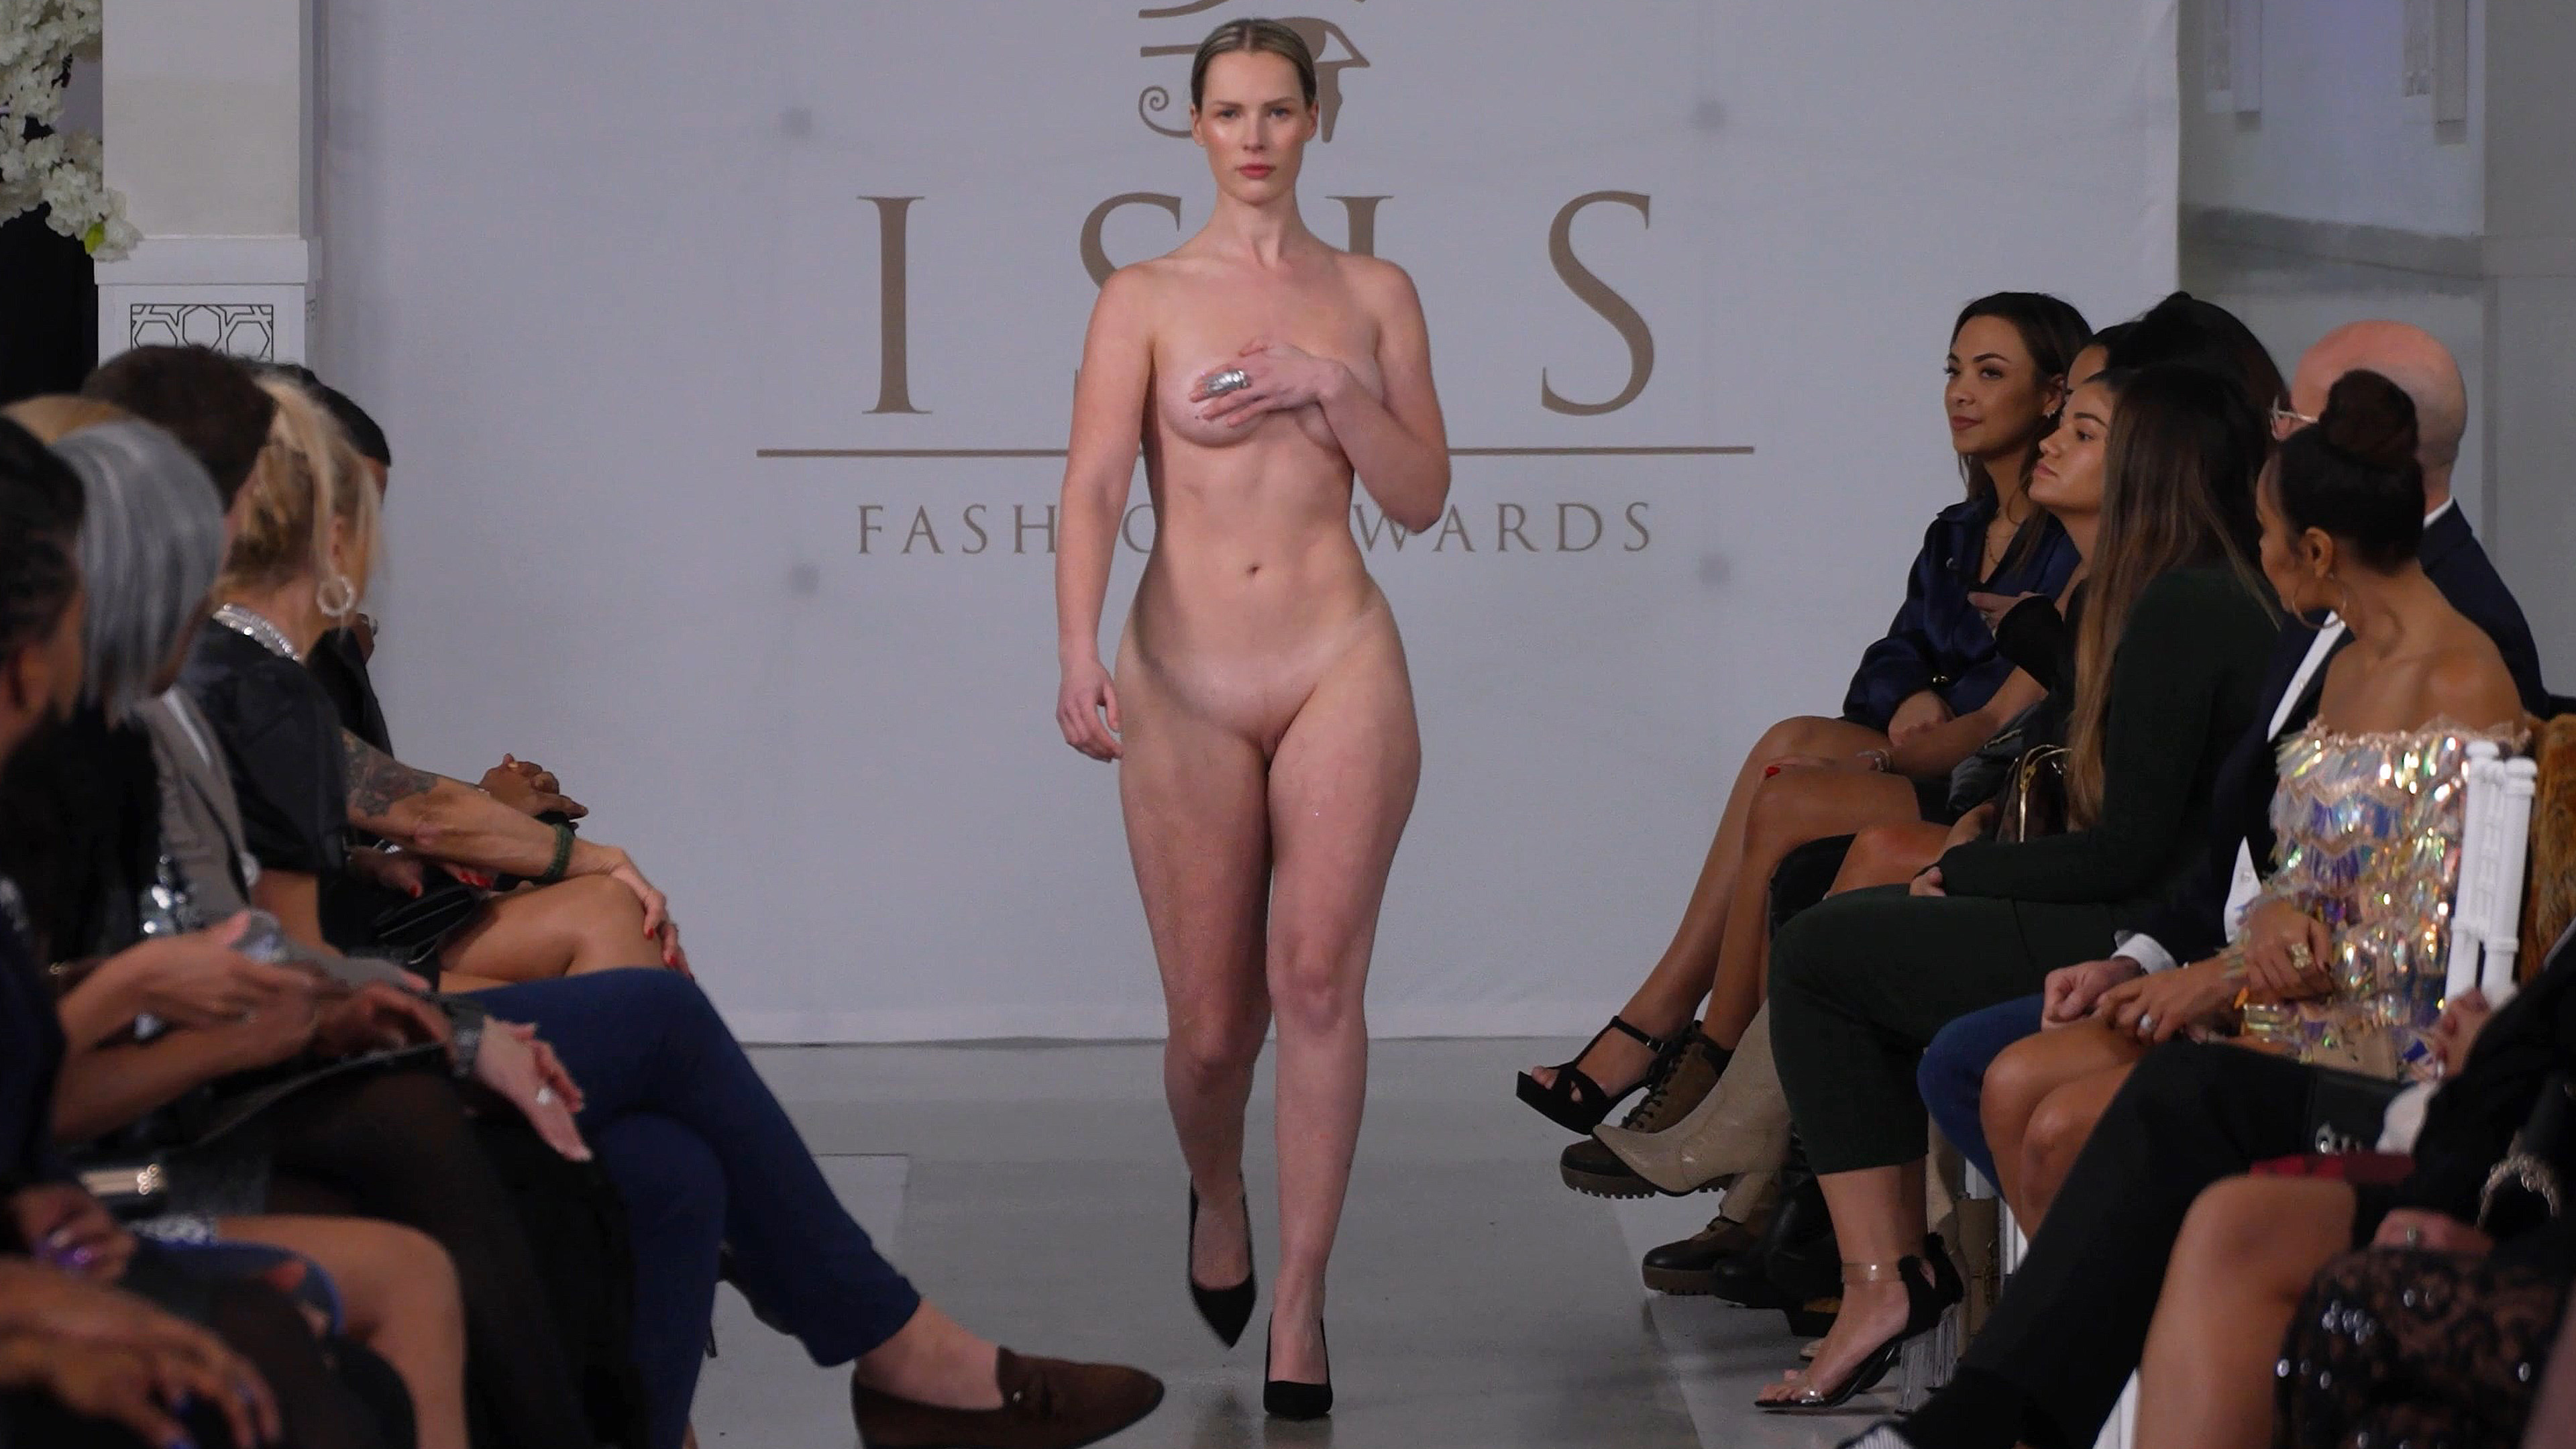 Fashion show nudes